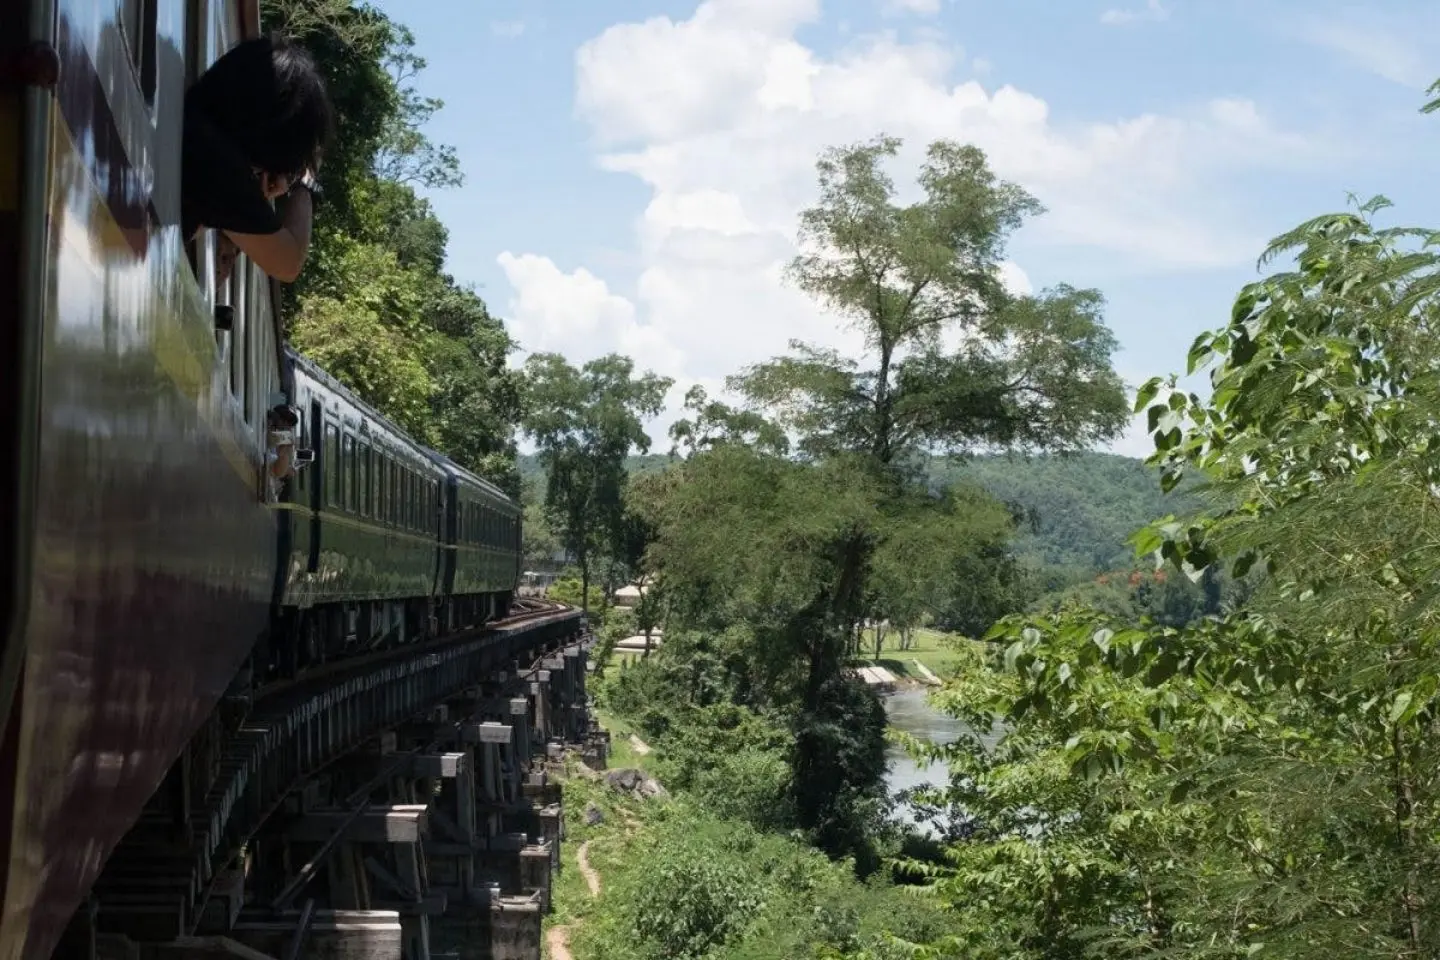 The Death Railway in Kanchanaburi, Thailand